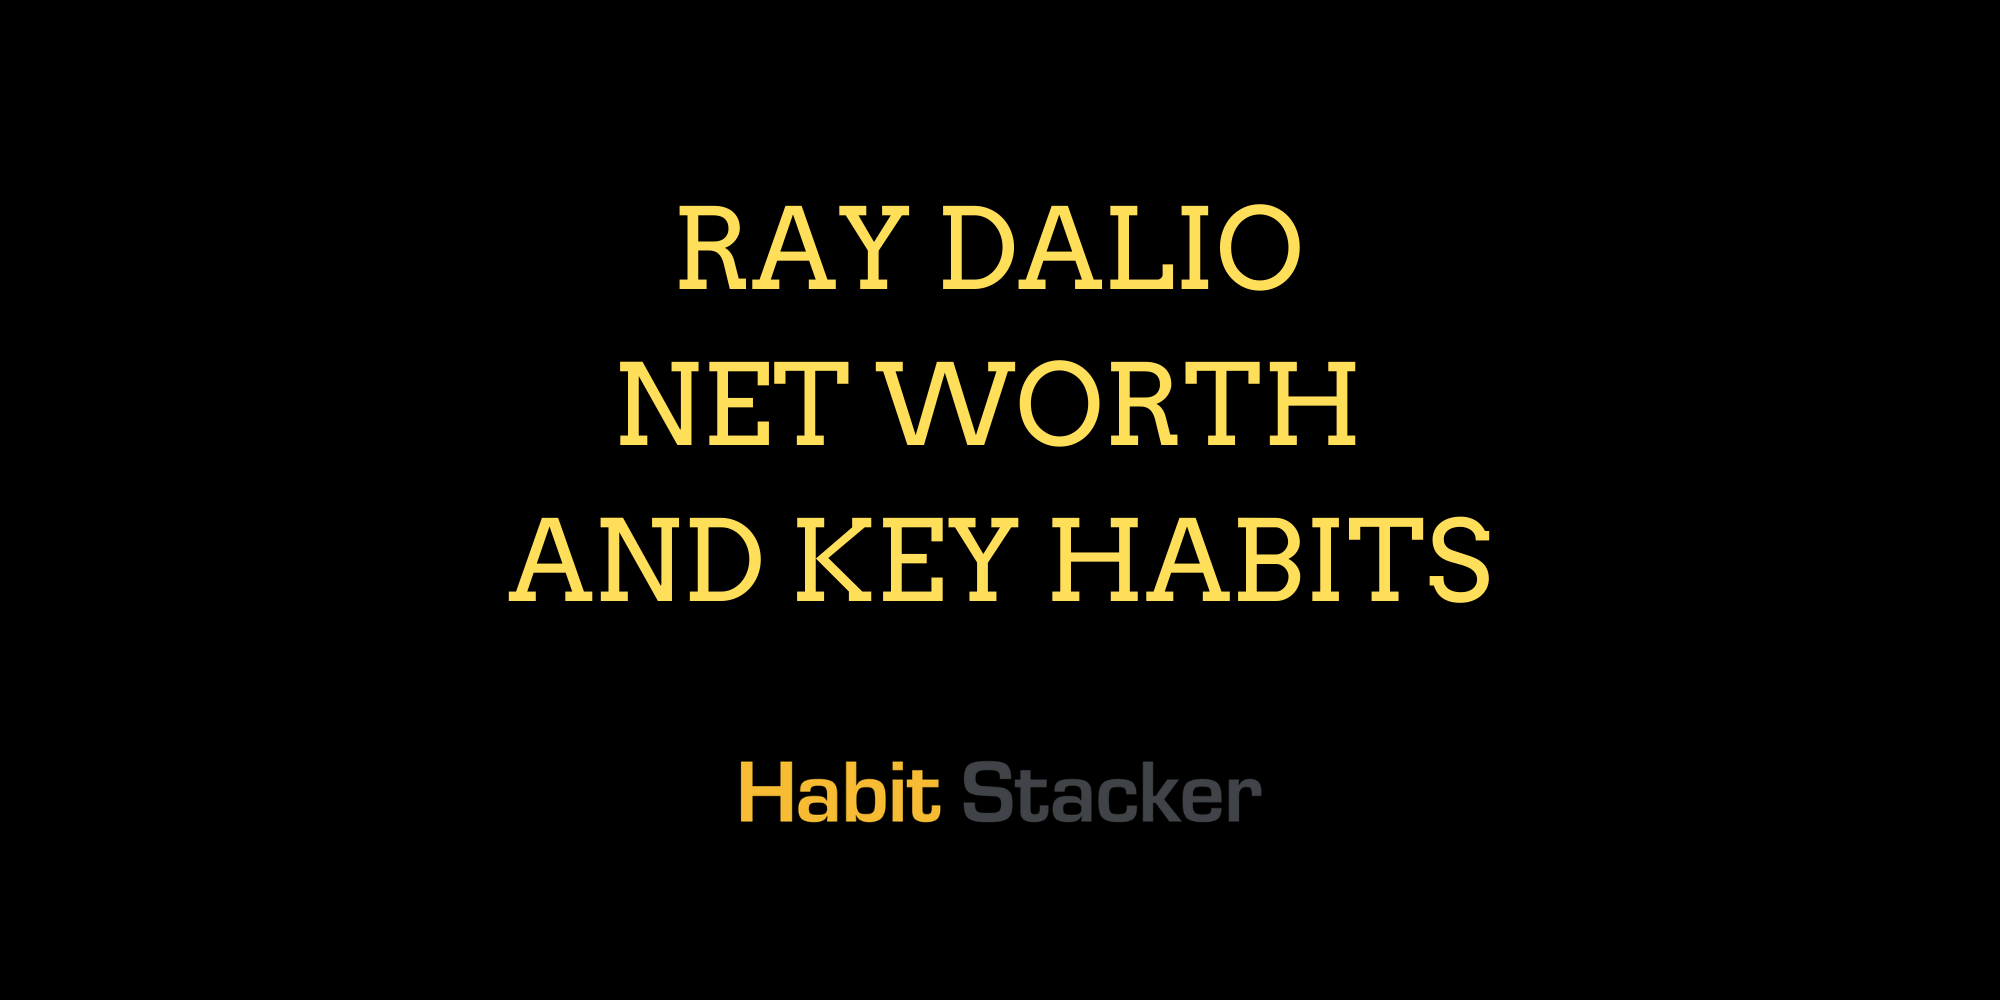 Ray Dalio Net Worth and Key Habits